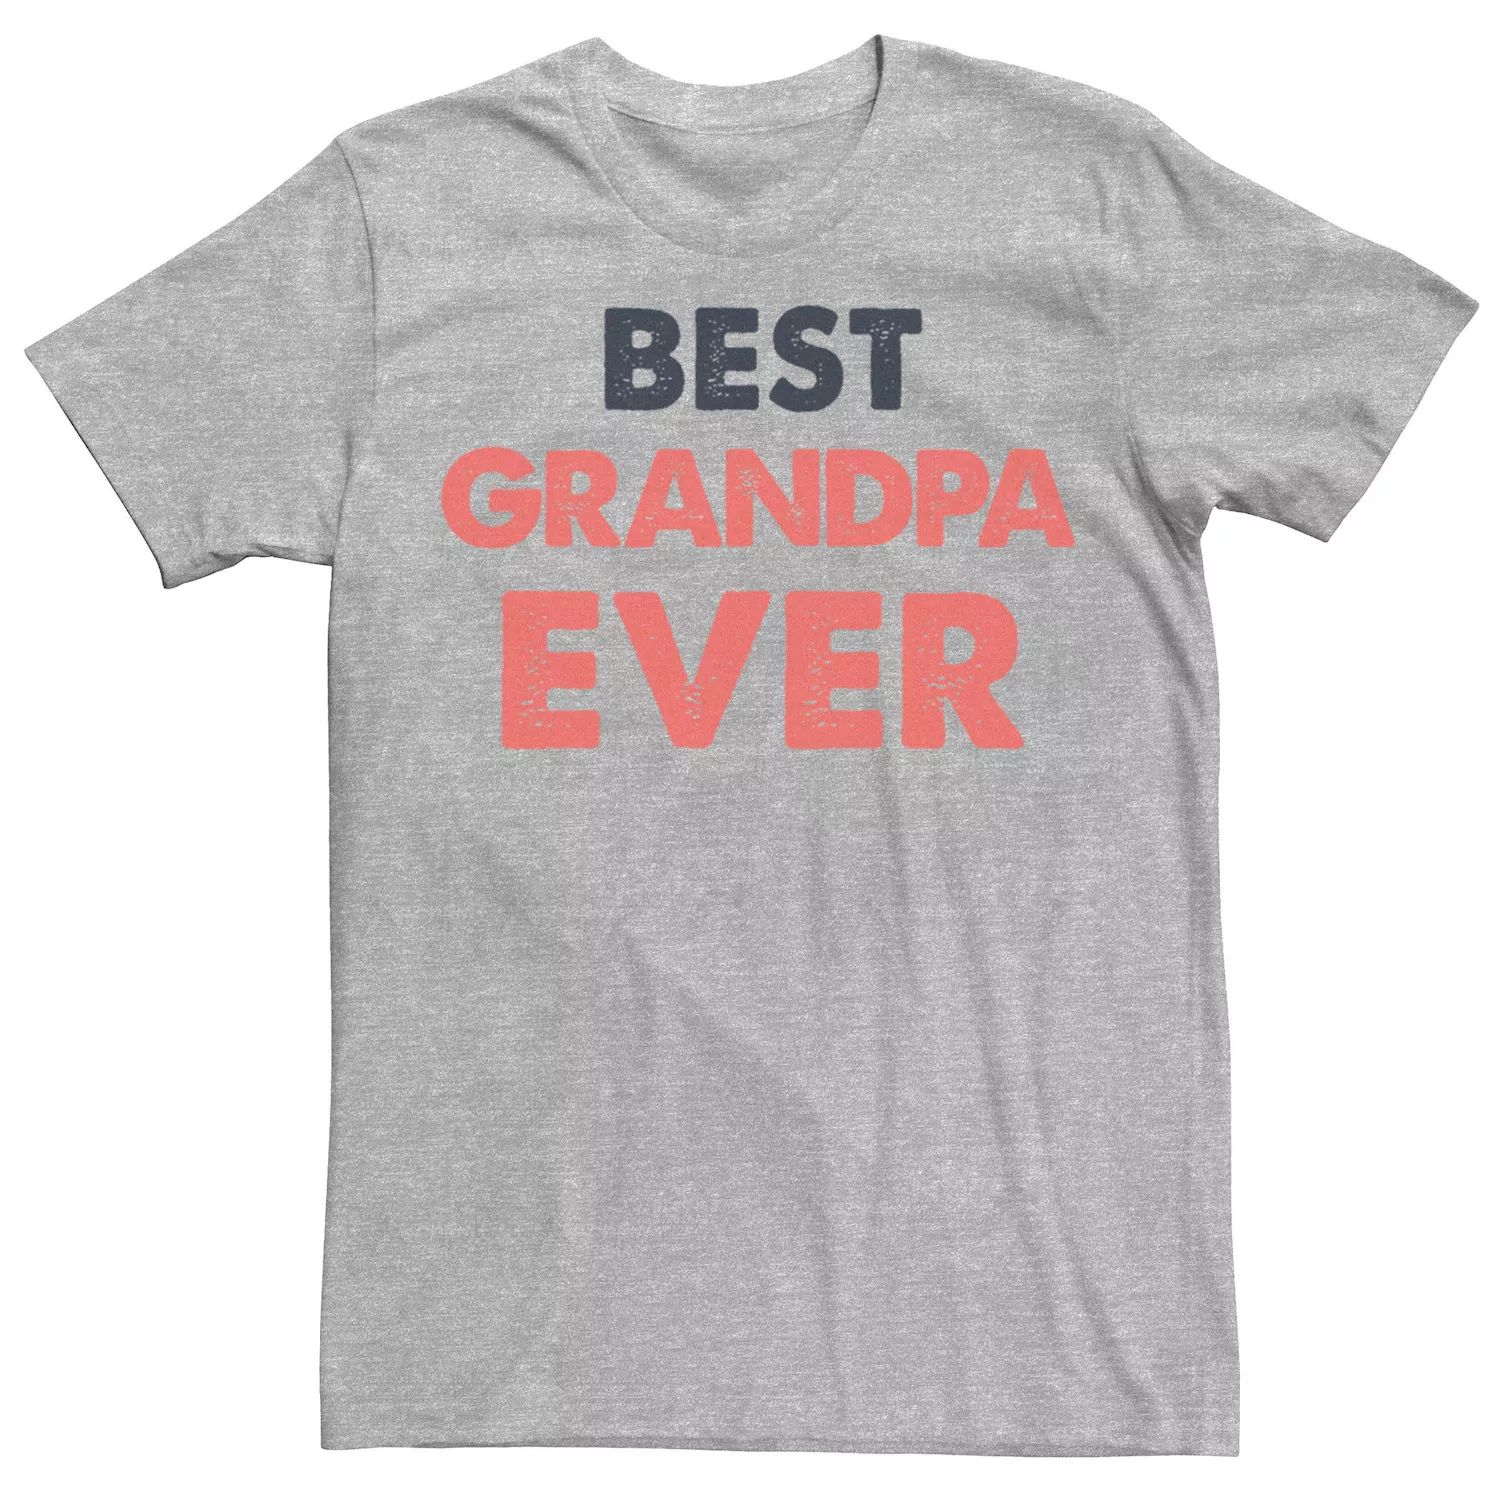 Мужская футболка Fifth Sun Best Grandpa Ever с жирной надписью Licensed Character